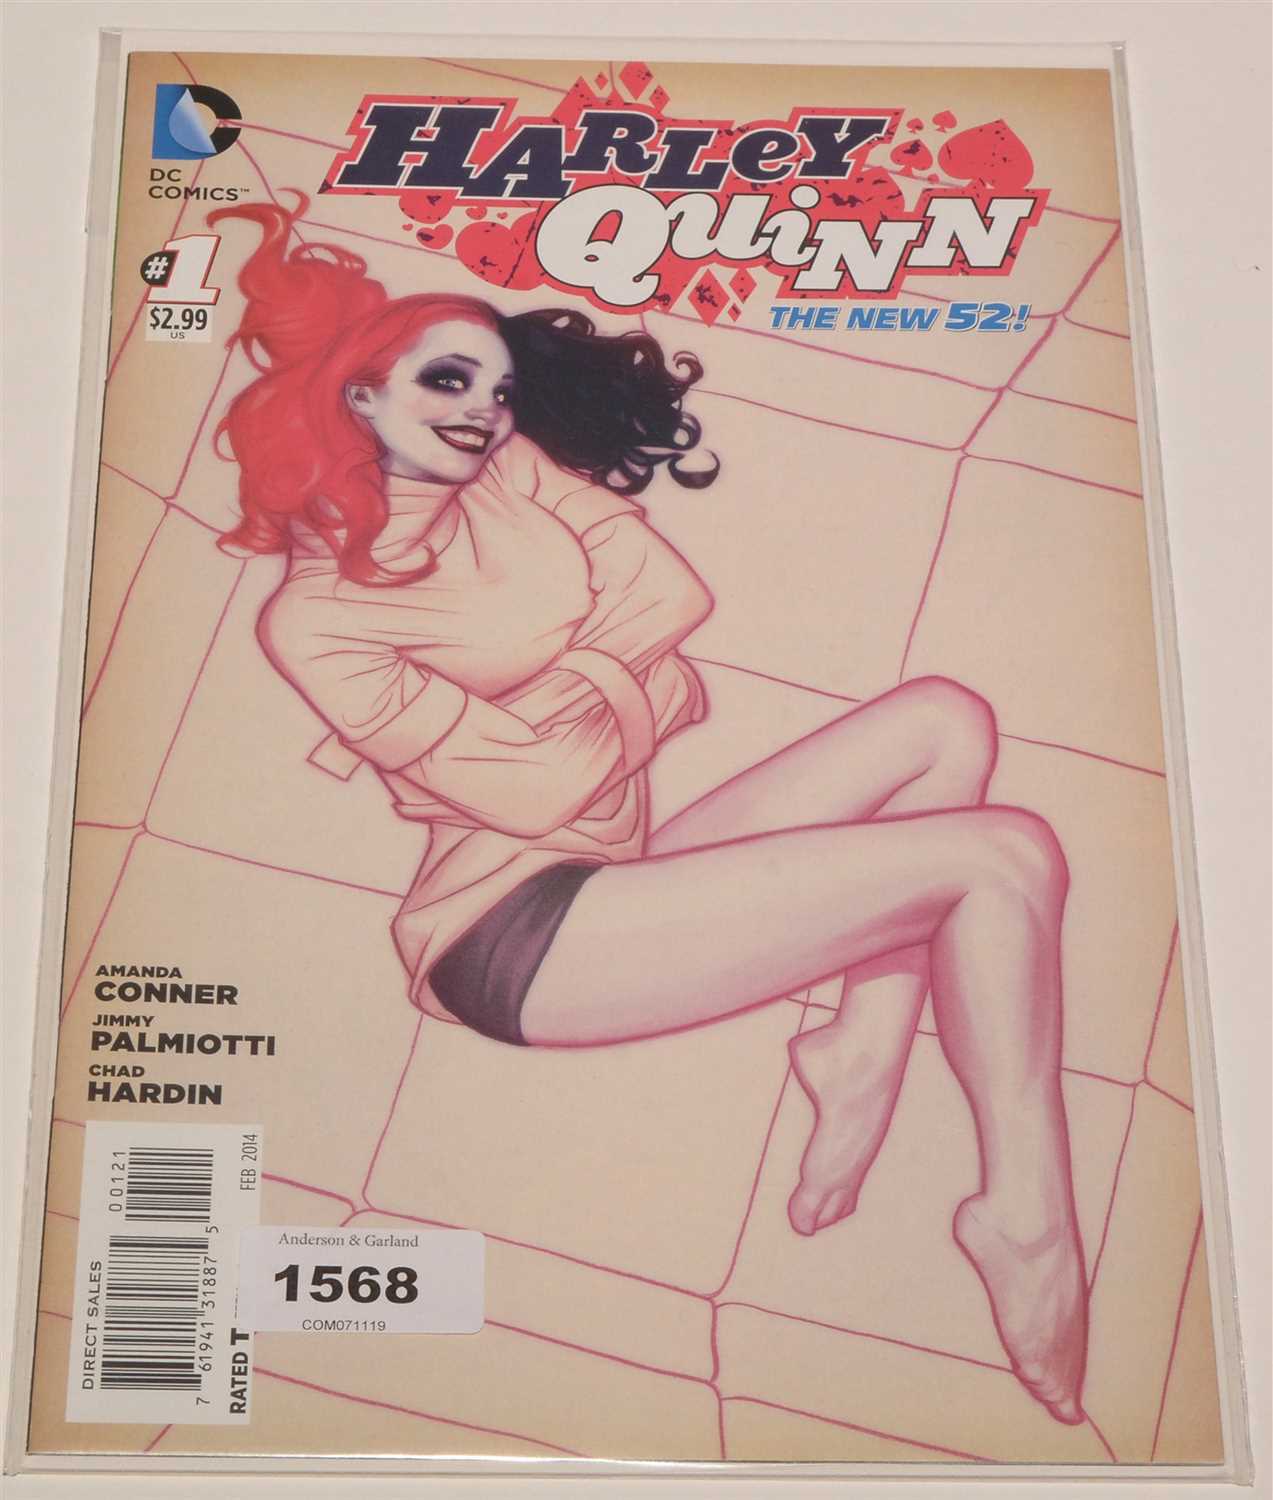 Lot 1568 - Harley Quinn No. 1